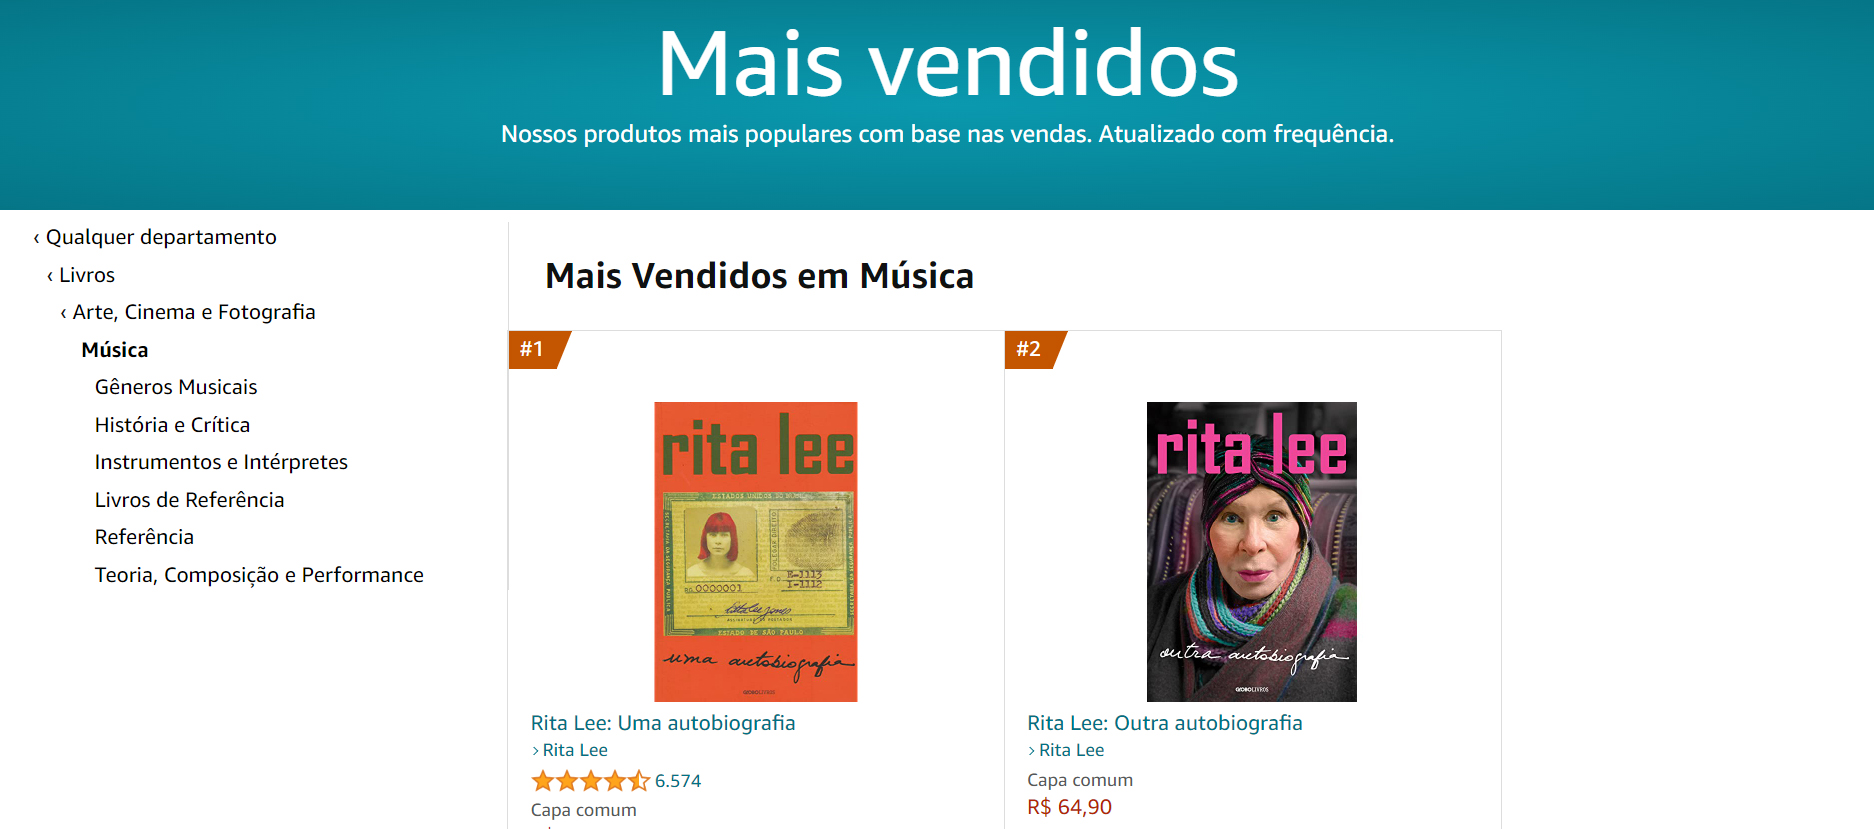 Autobiografia de Rita Lee lidera vendas na Amazon após morte da cantora